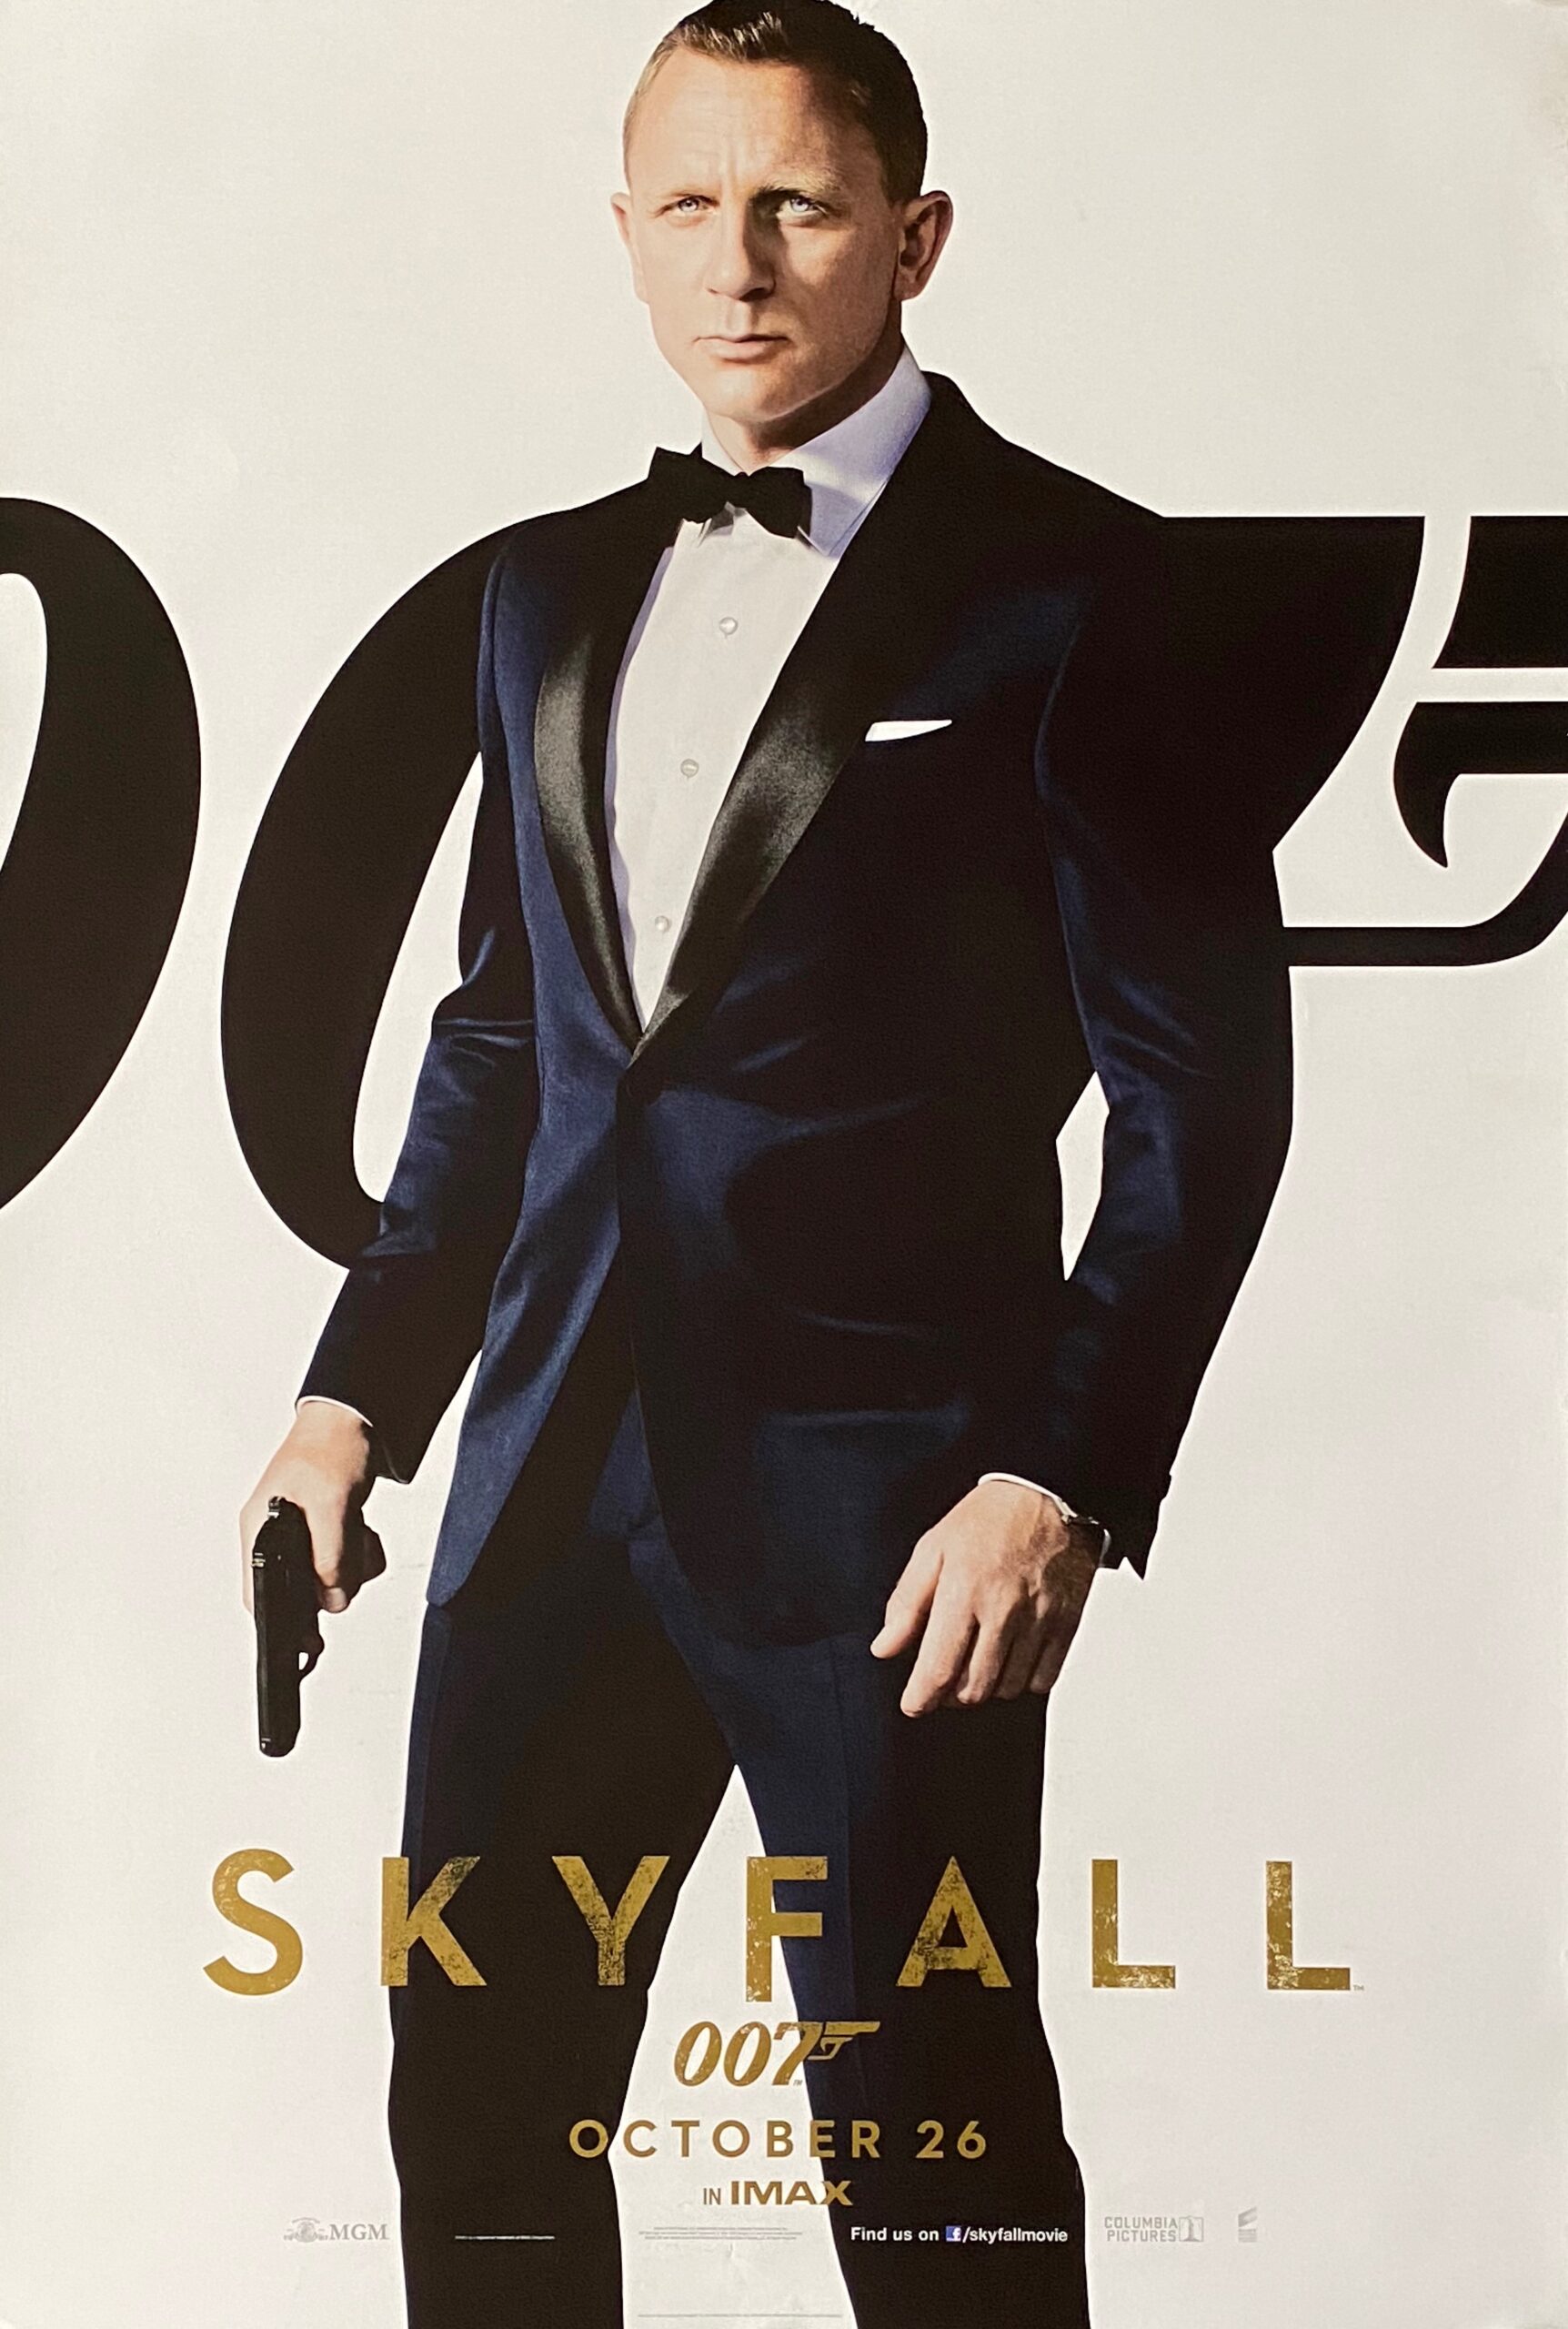 007 Logo Skyfall